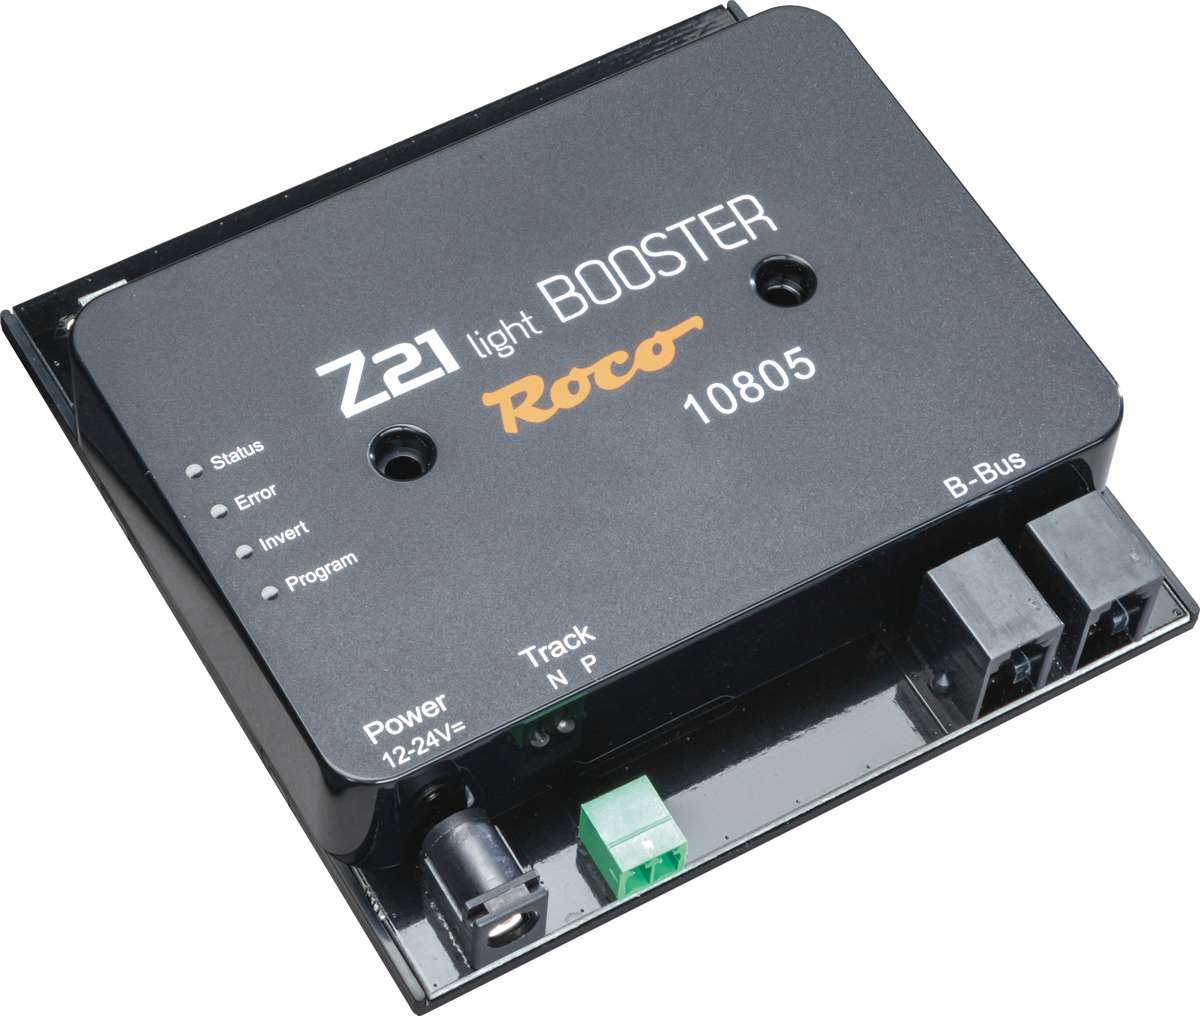 Roco 10805 - Z21-Booster, light